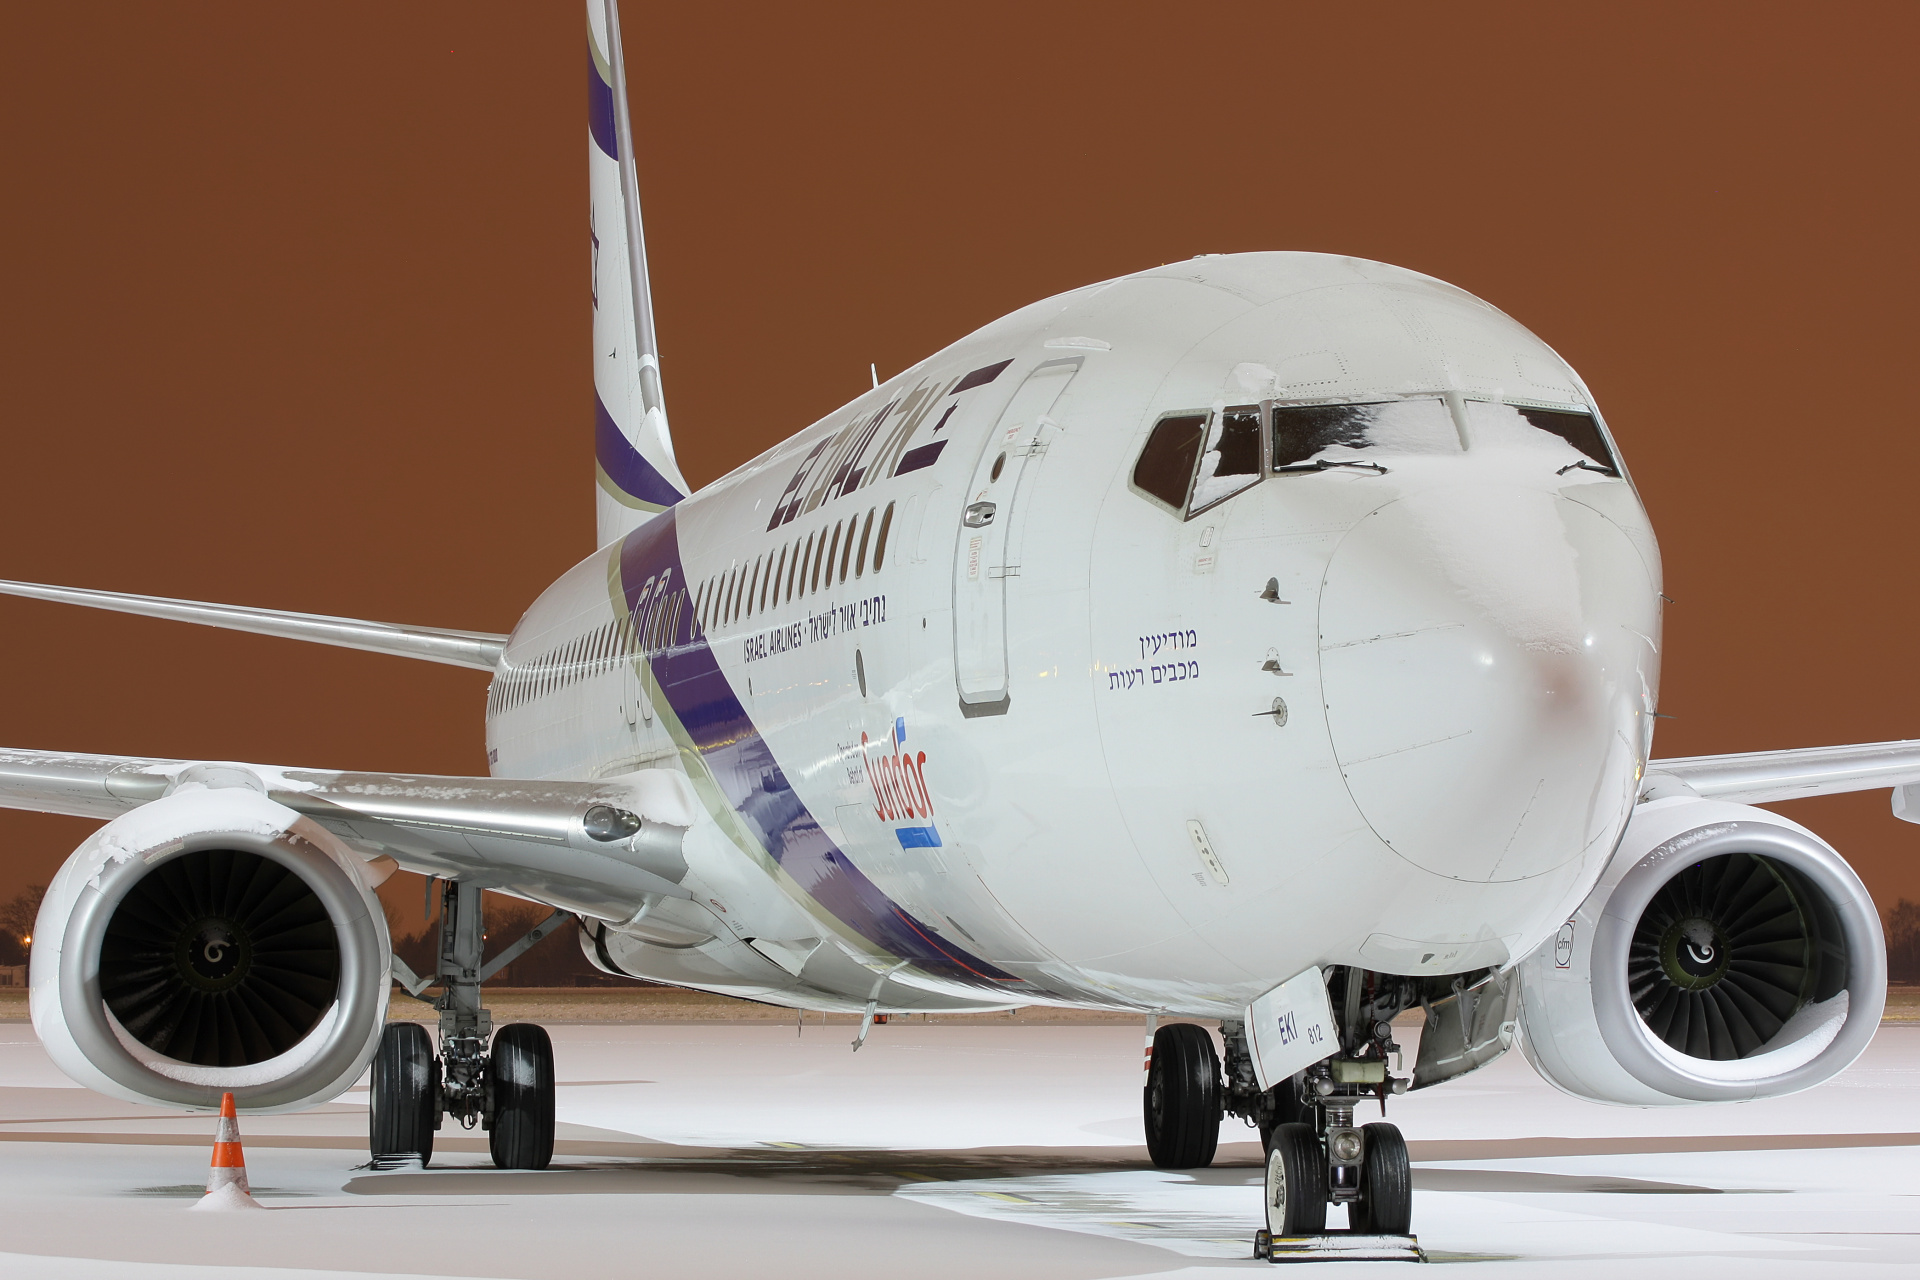 4X-EKI (Sund'or) (Aircraft » EPWA Spotting » Boeing 737-800 » El Al Israel Airlines)